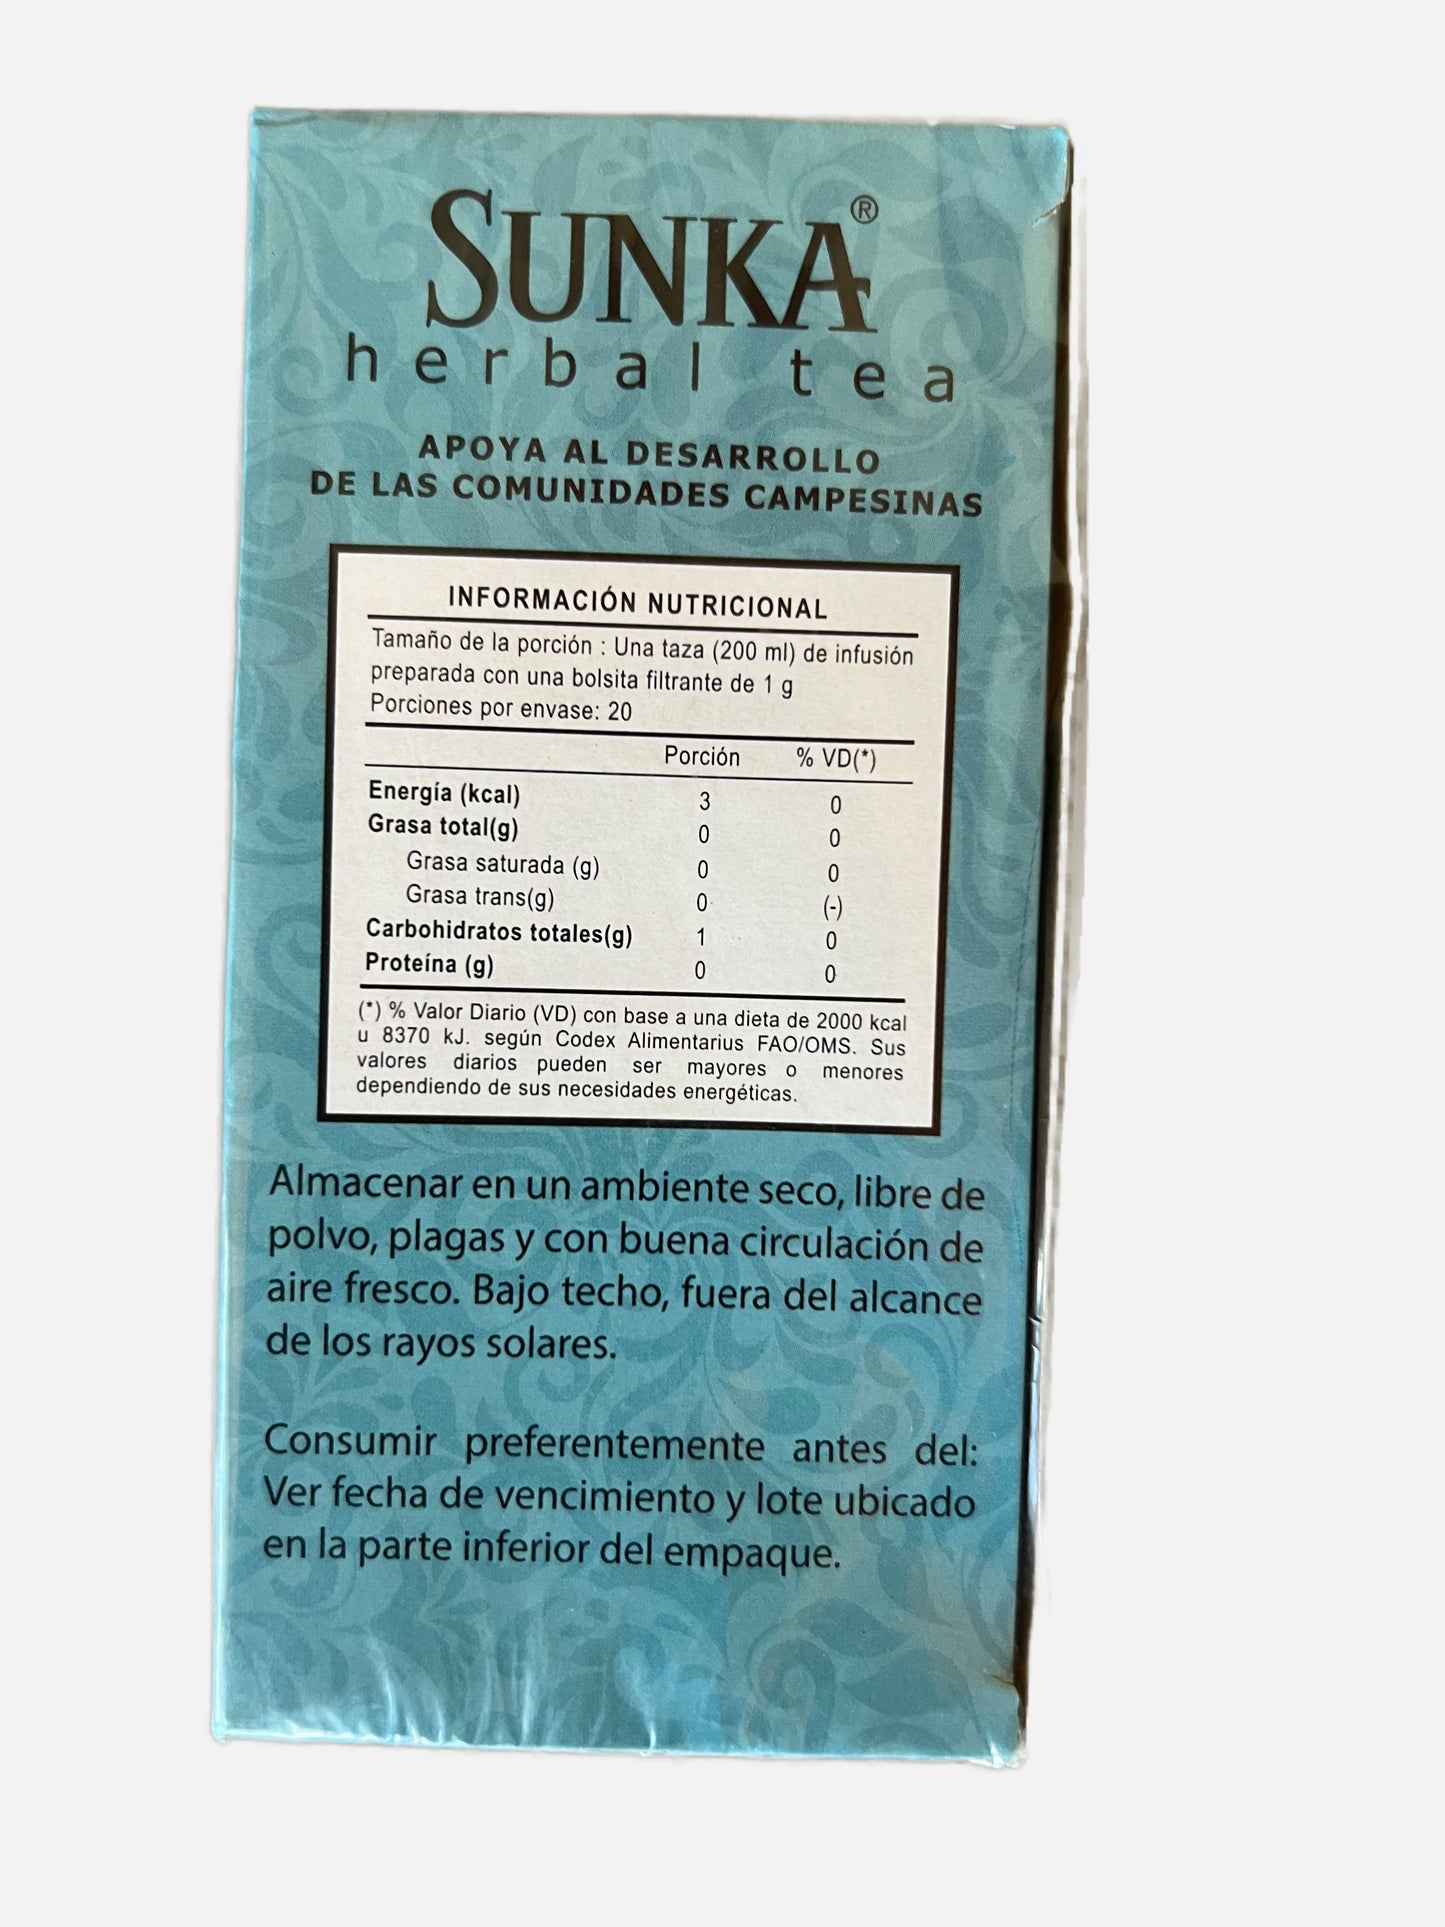 SUNKA Coca Premium Tea 40 Tea Bags